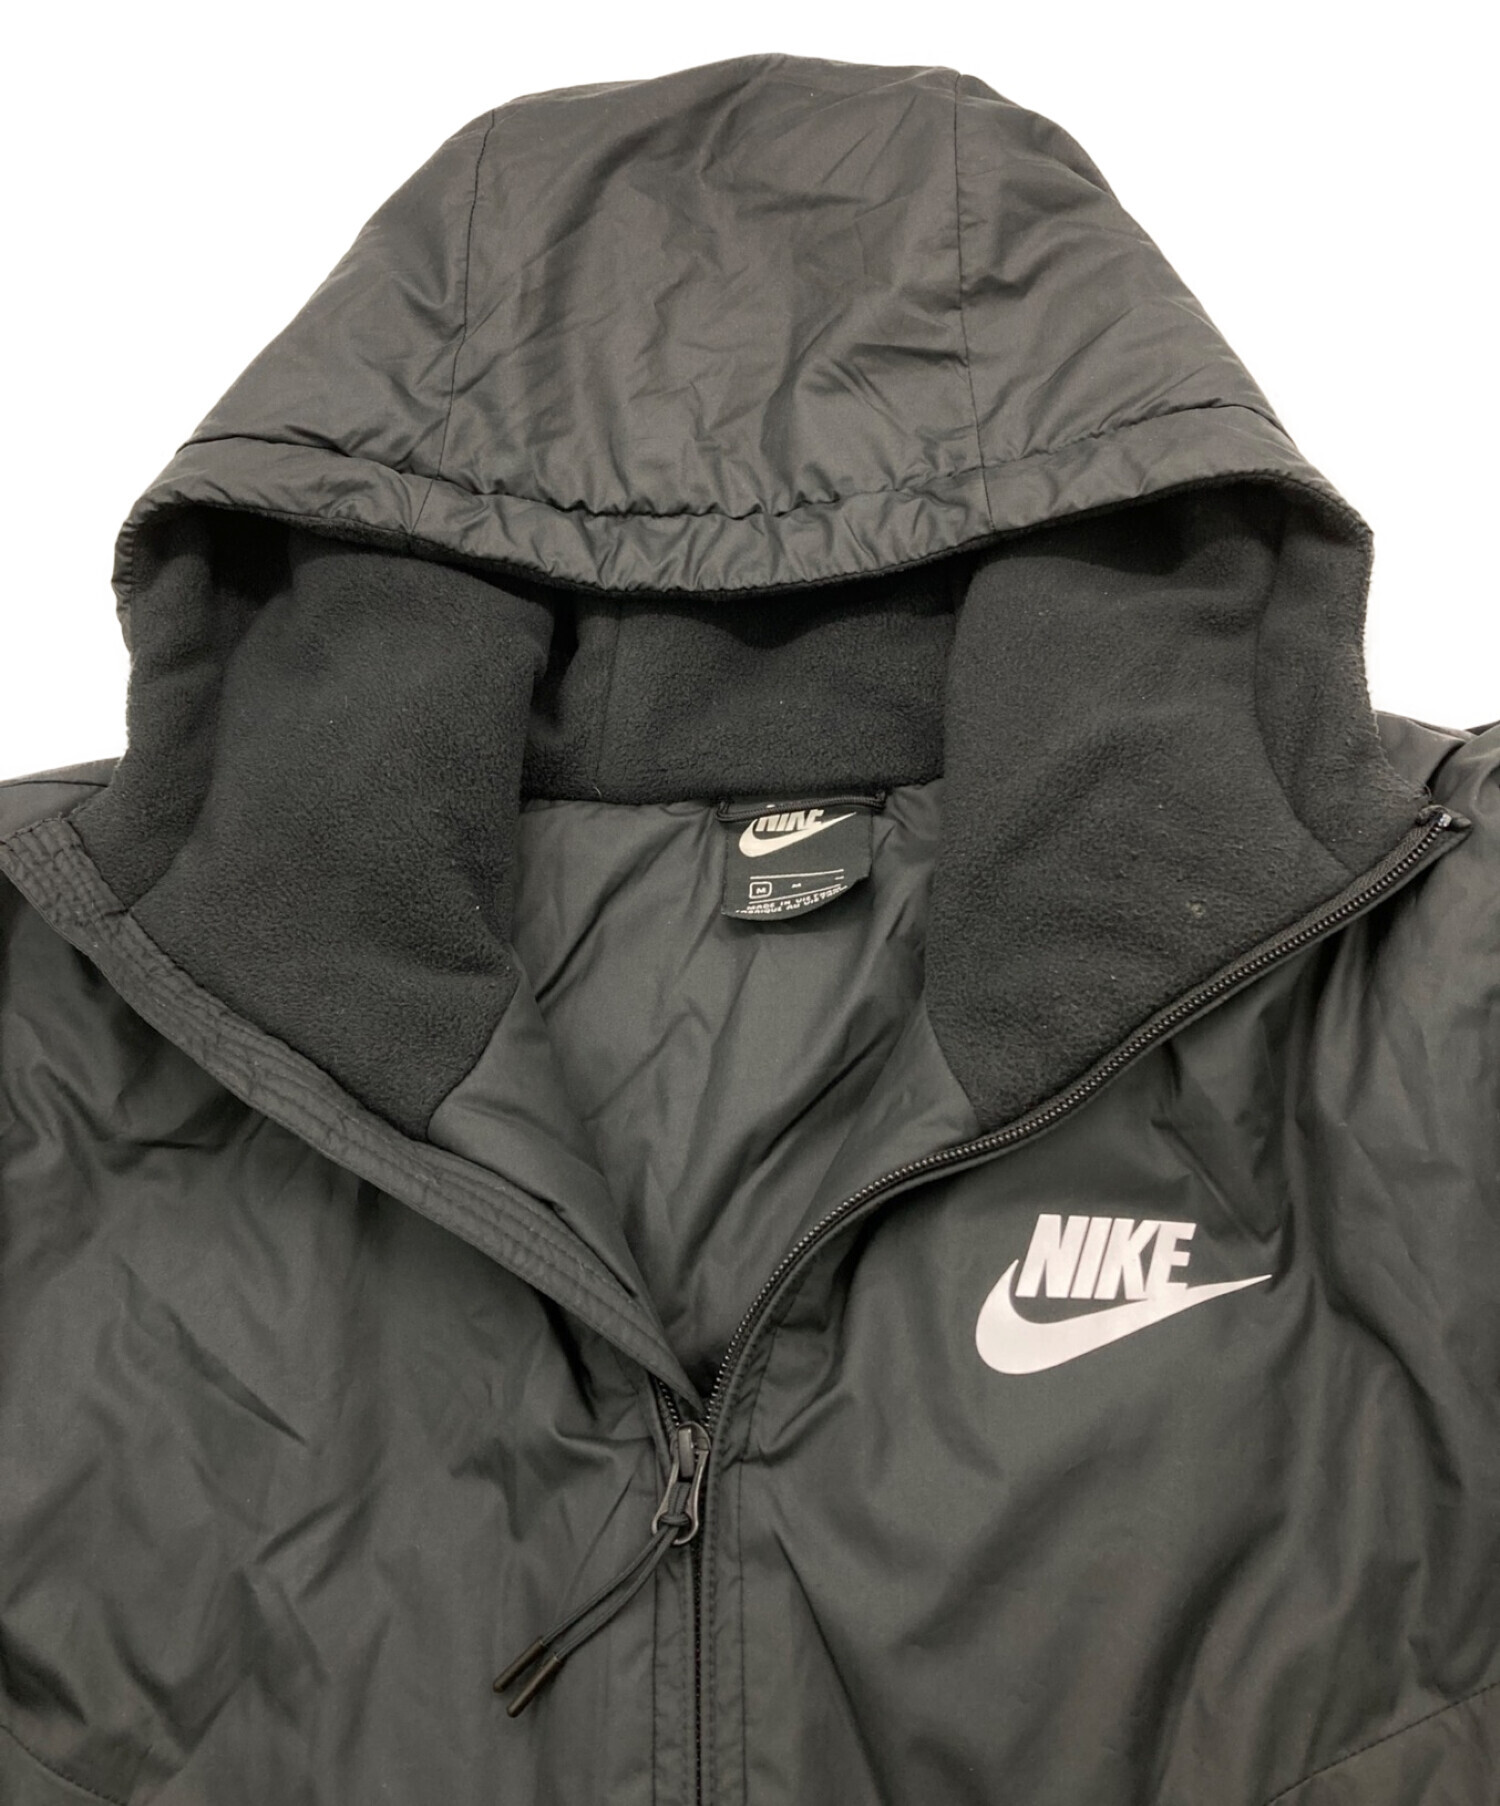 NIKE (ナイキ) Synthetic Fill Hooded Jacket/中綿フーデッドジャケット ブラック サイズ:Ⅼ